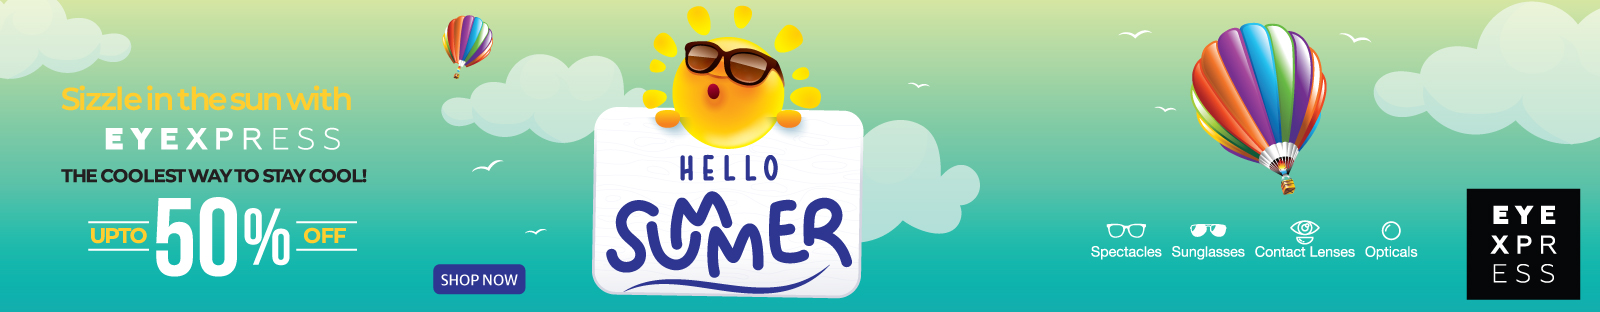 Hello-Summer-banner-en.jpg